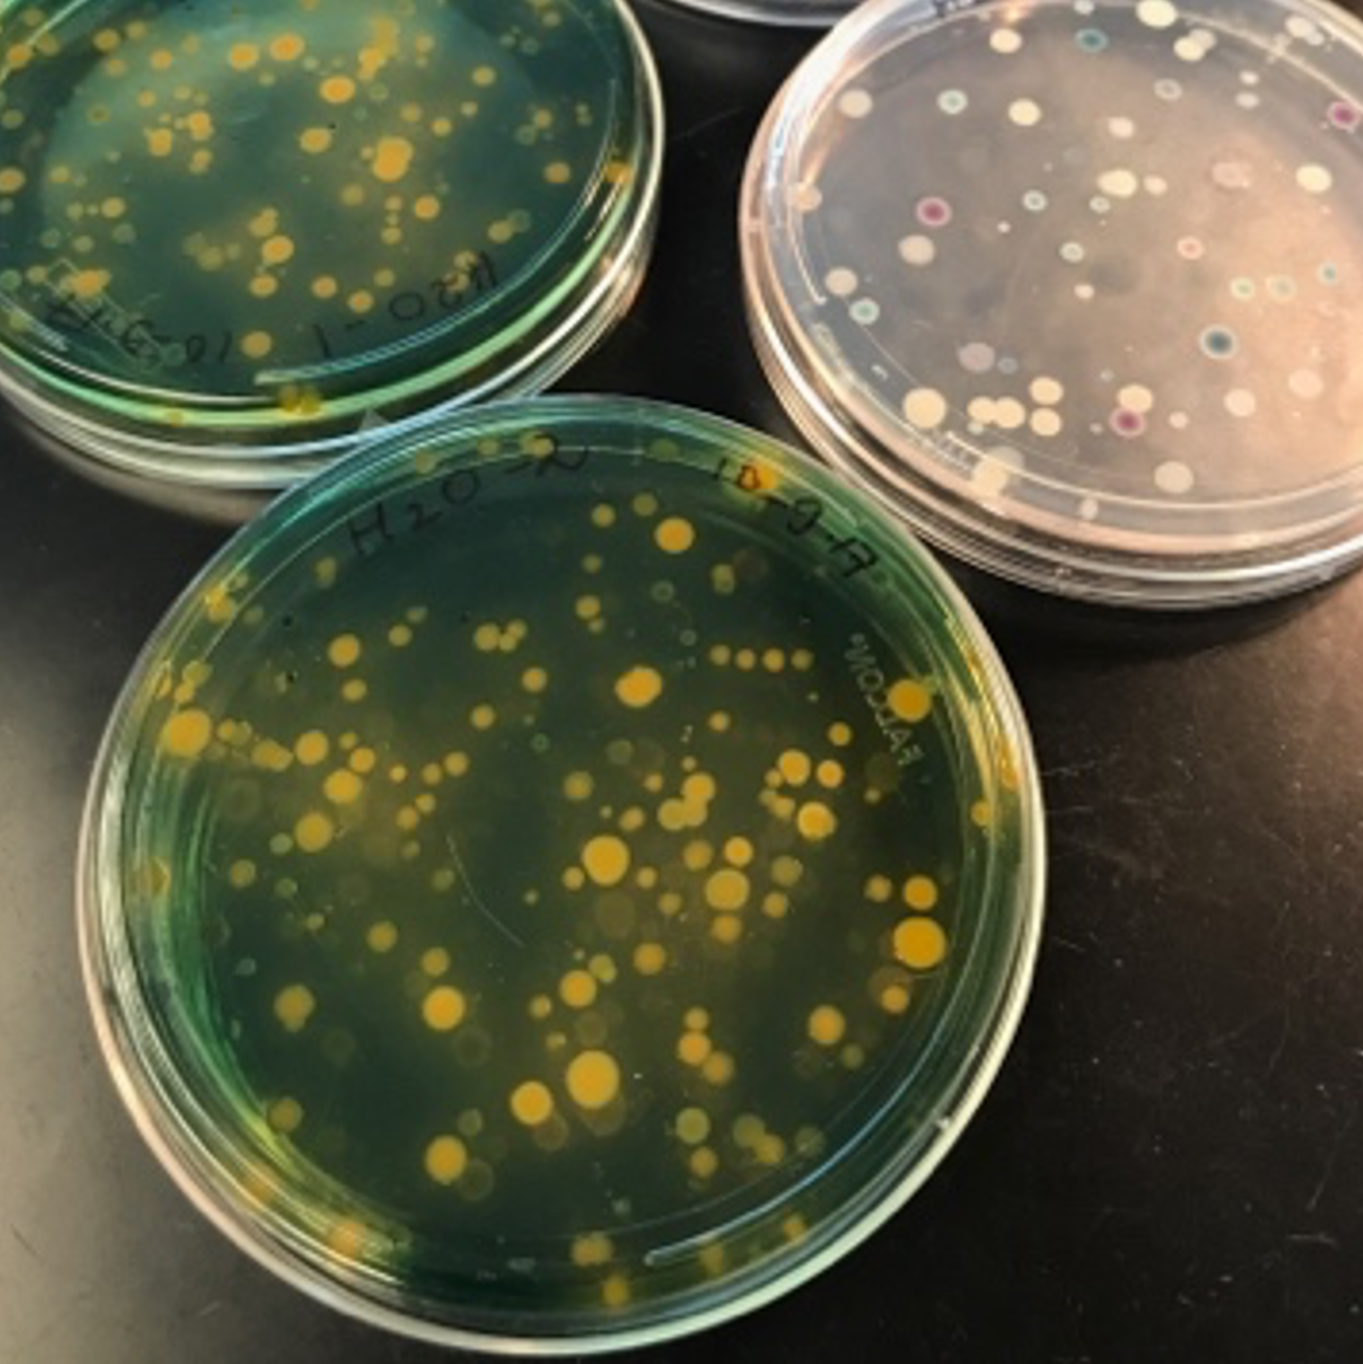 Vibrio bacteria on a plate.